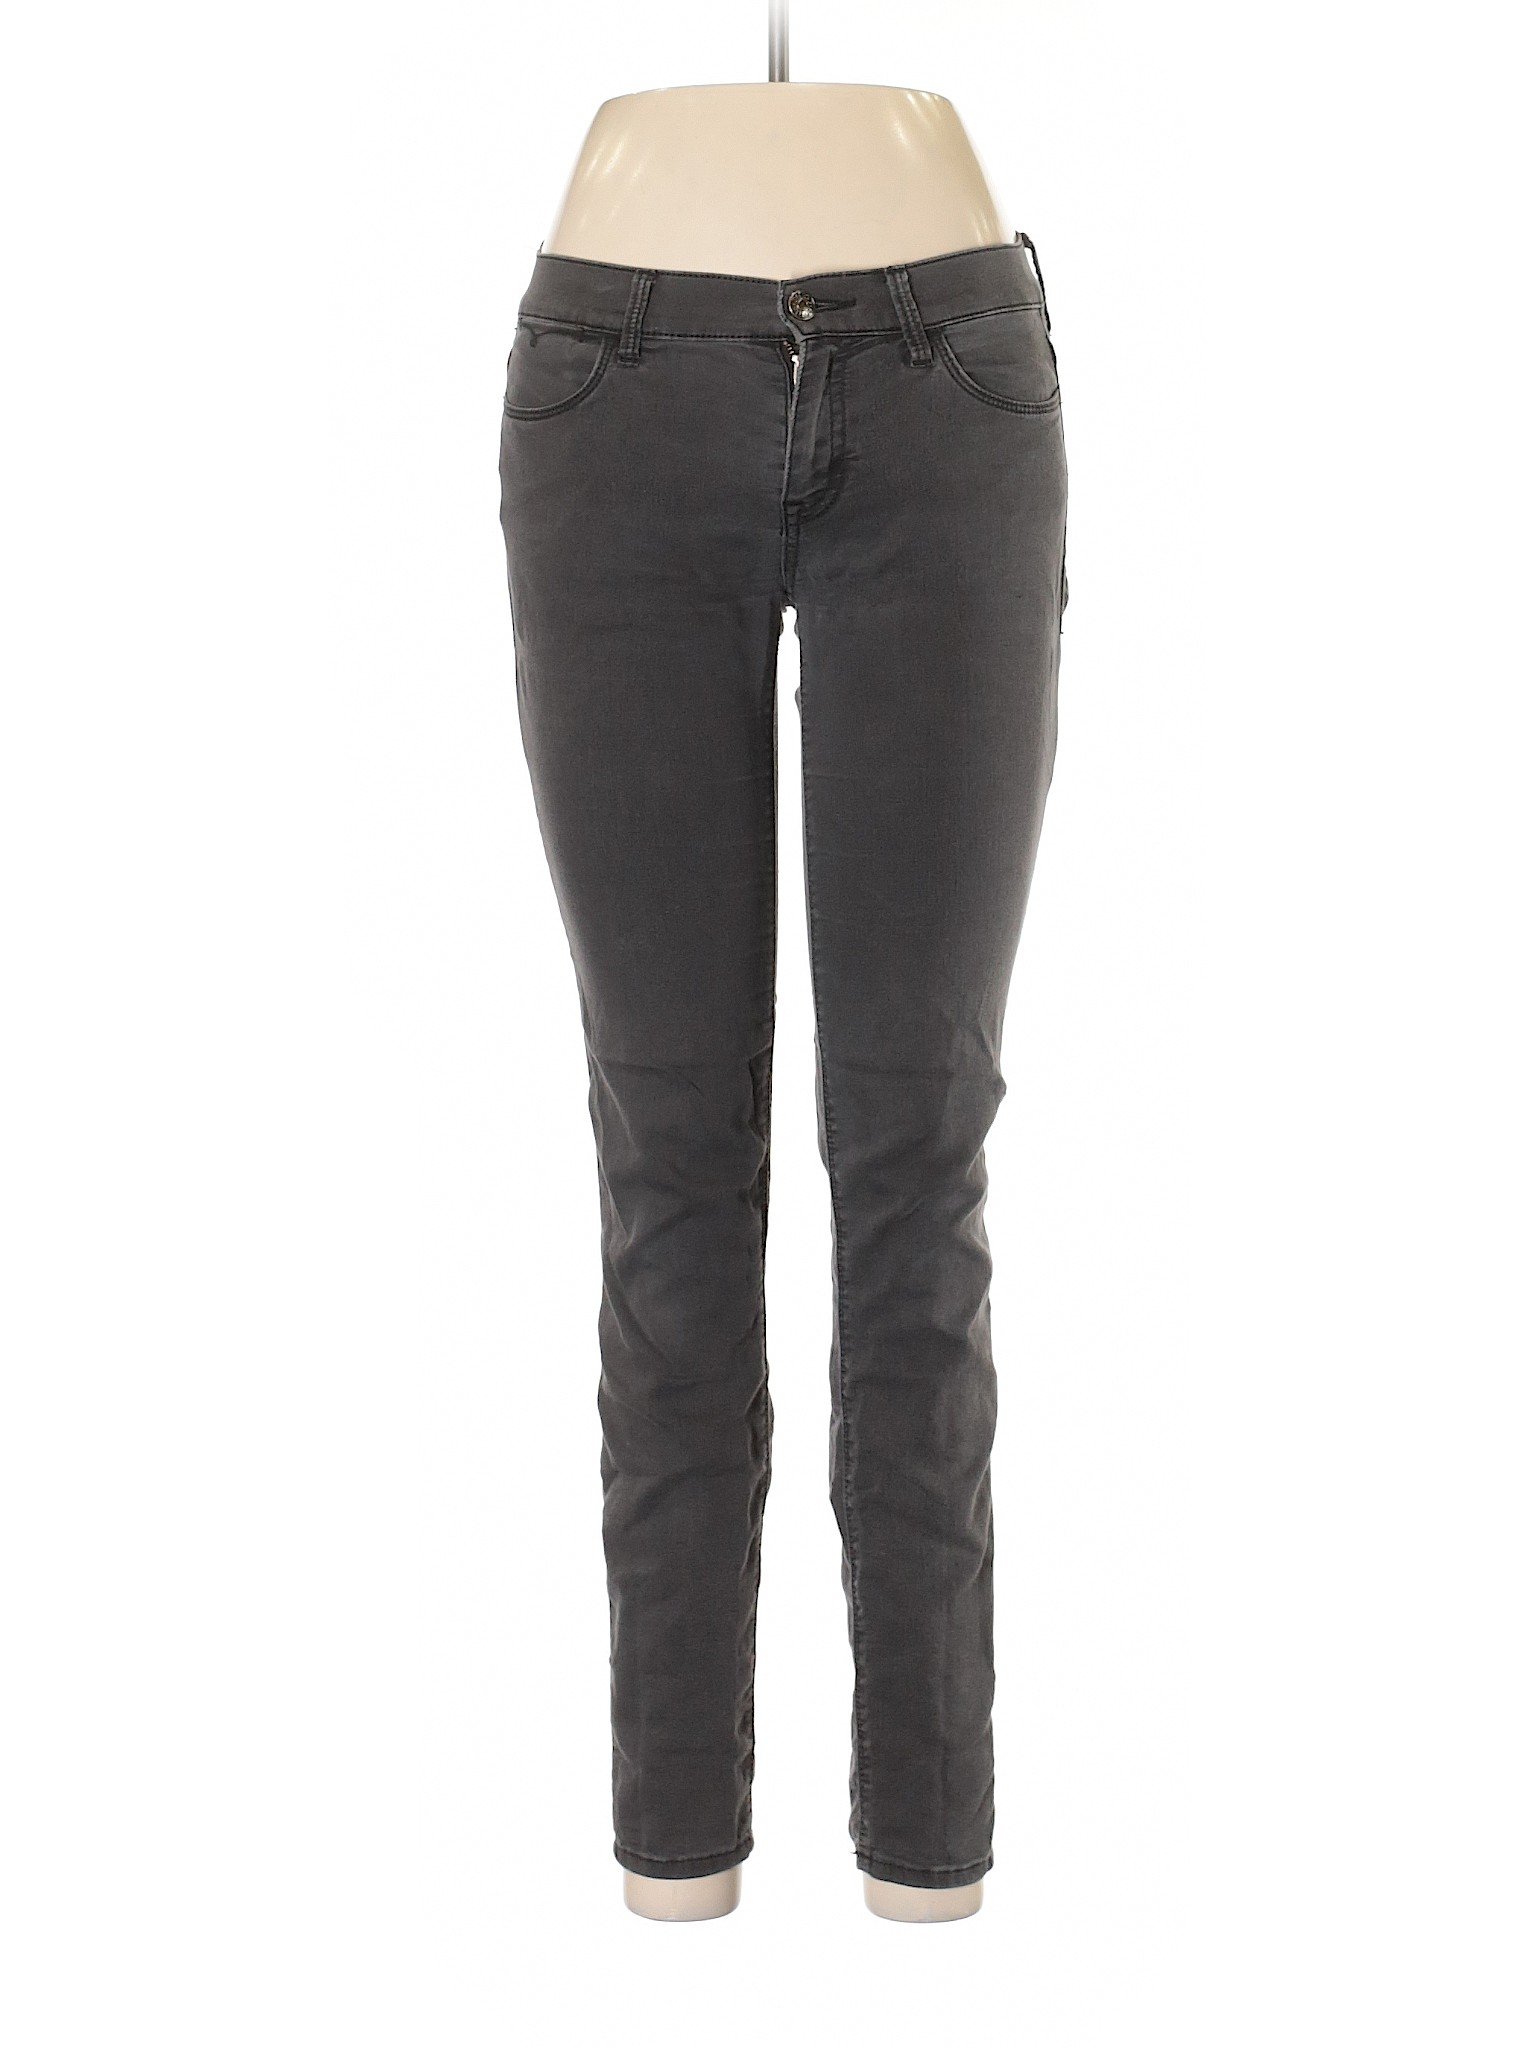 Dittos Women Black Jeans 27W | eBay